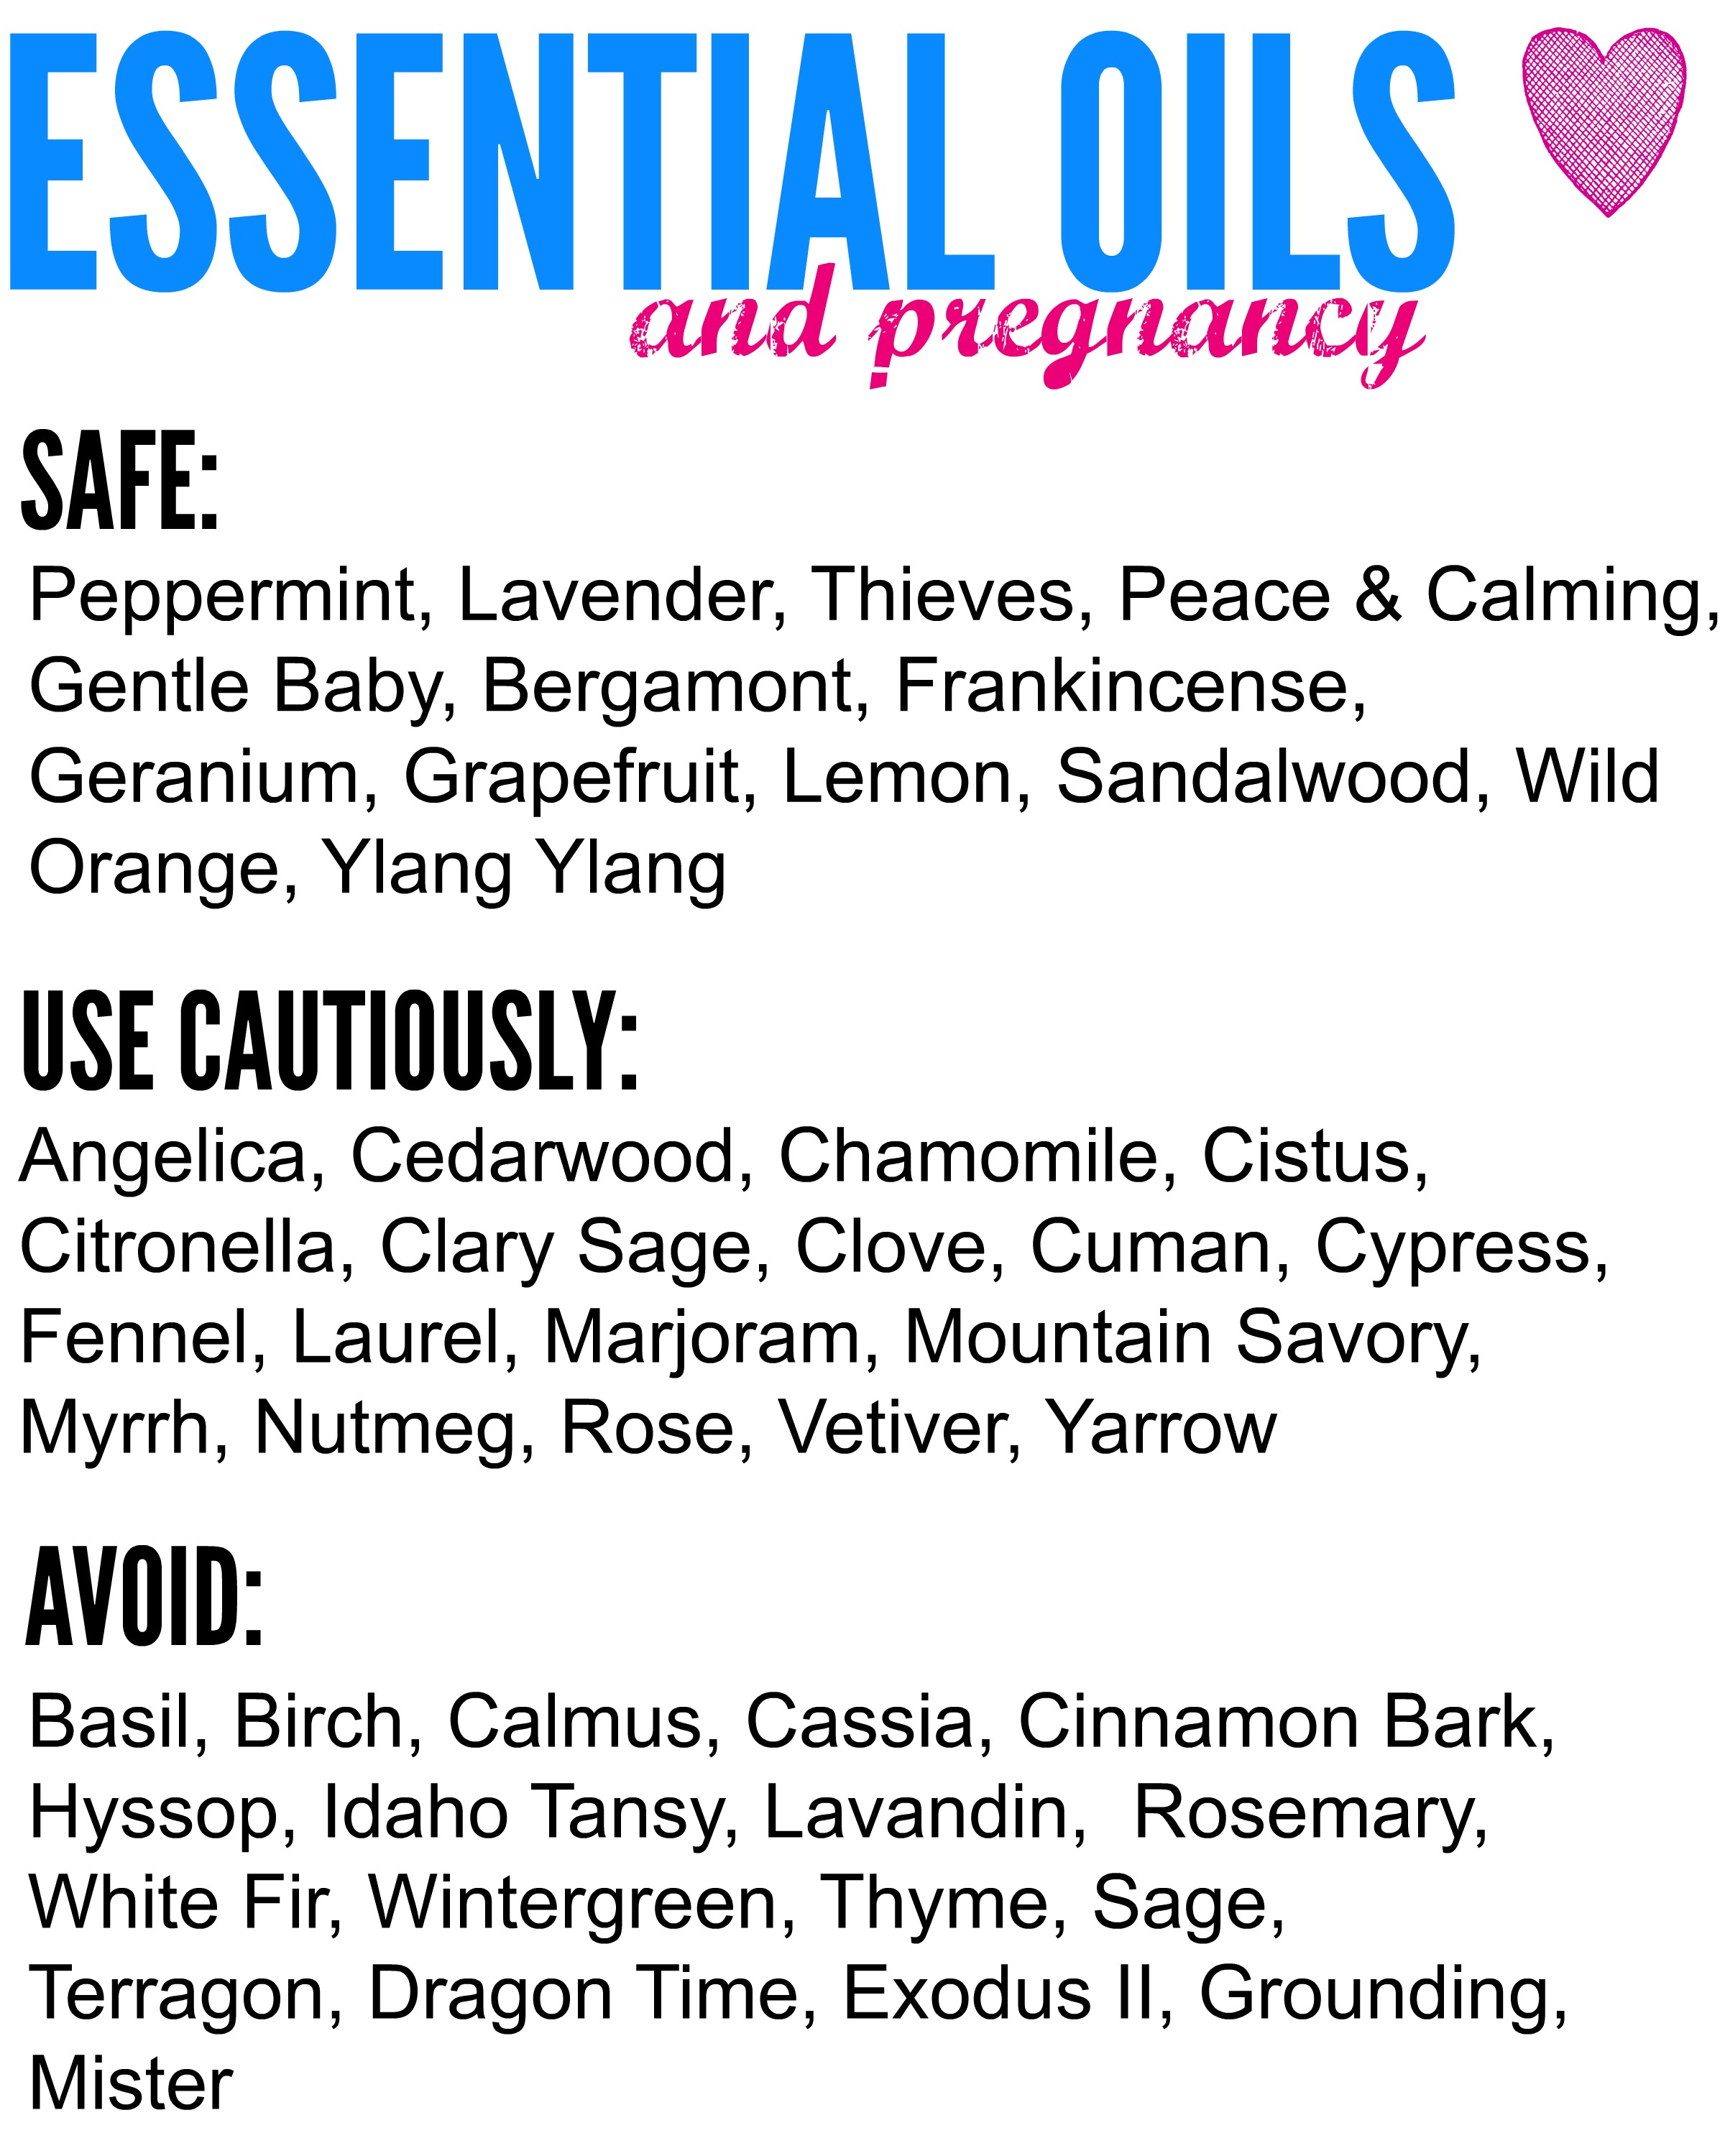 Safe Essential Oils For Pregnancy